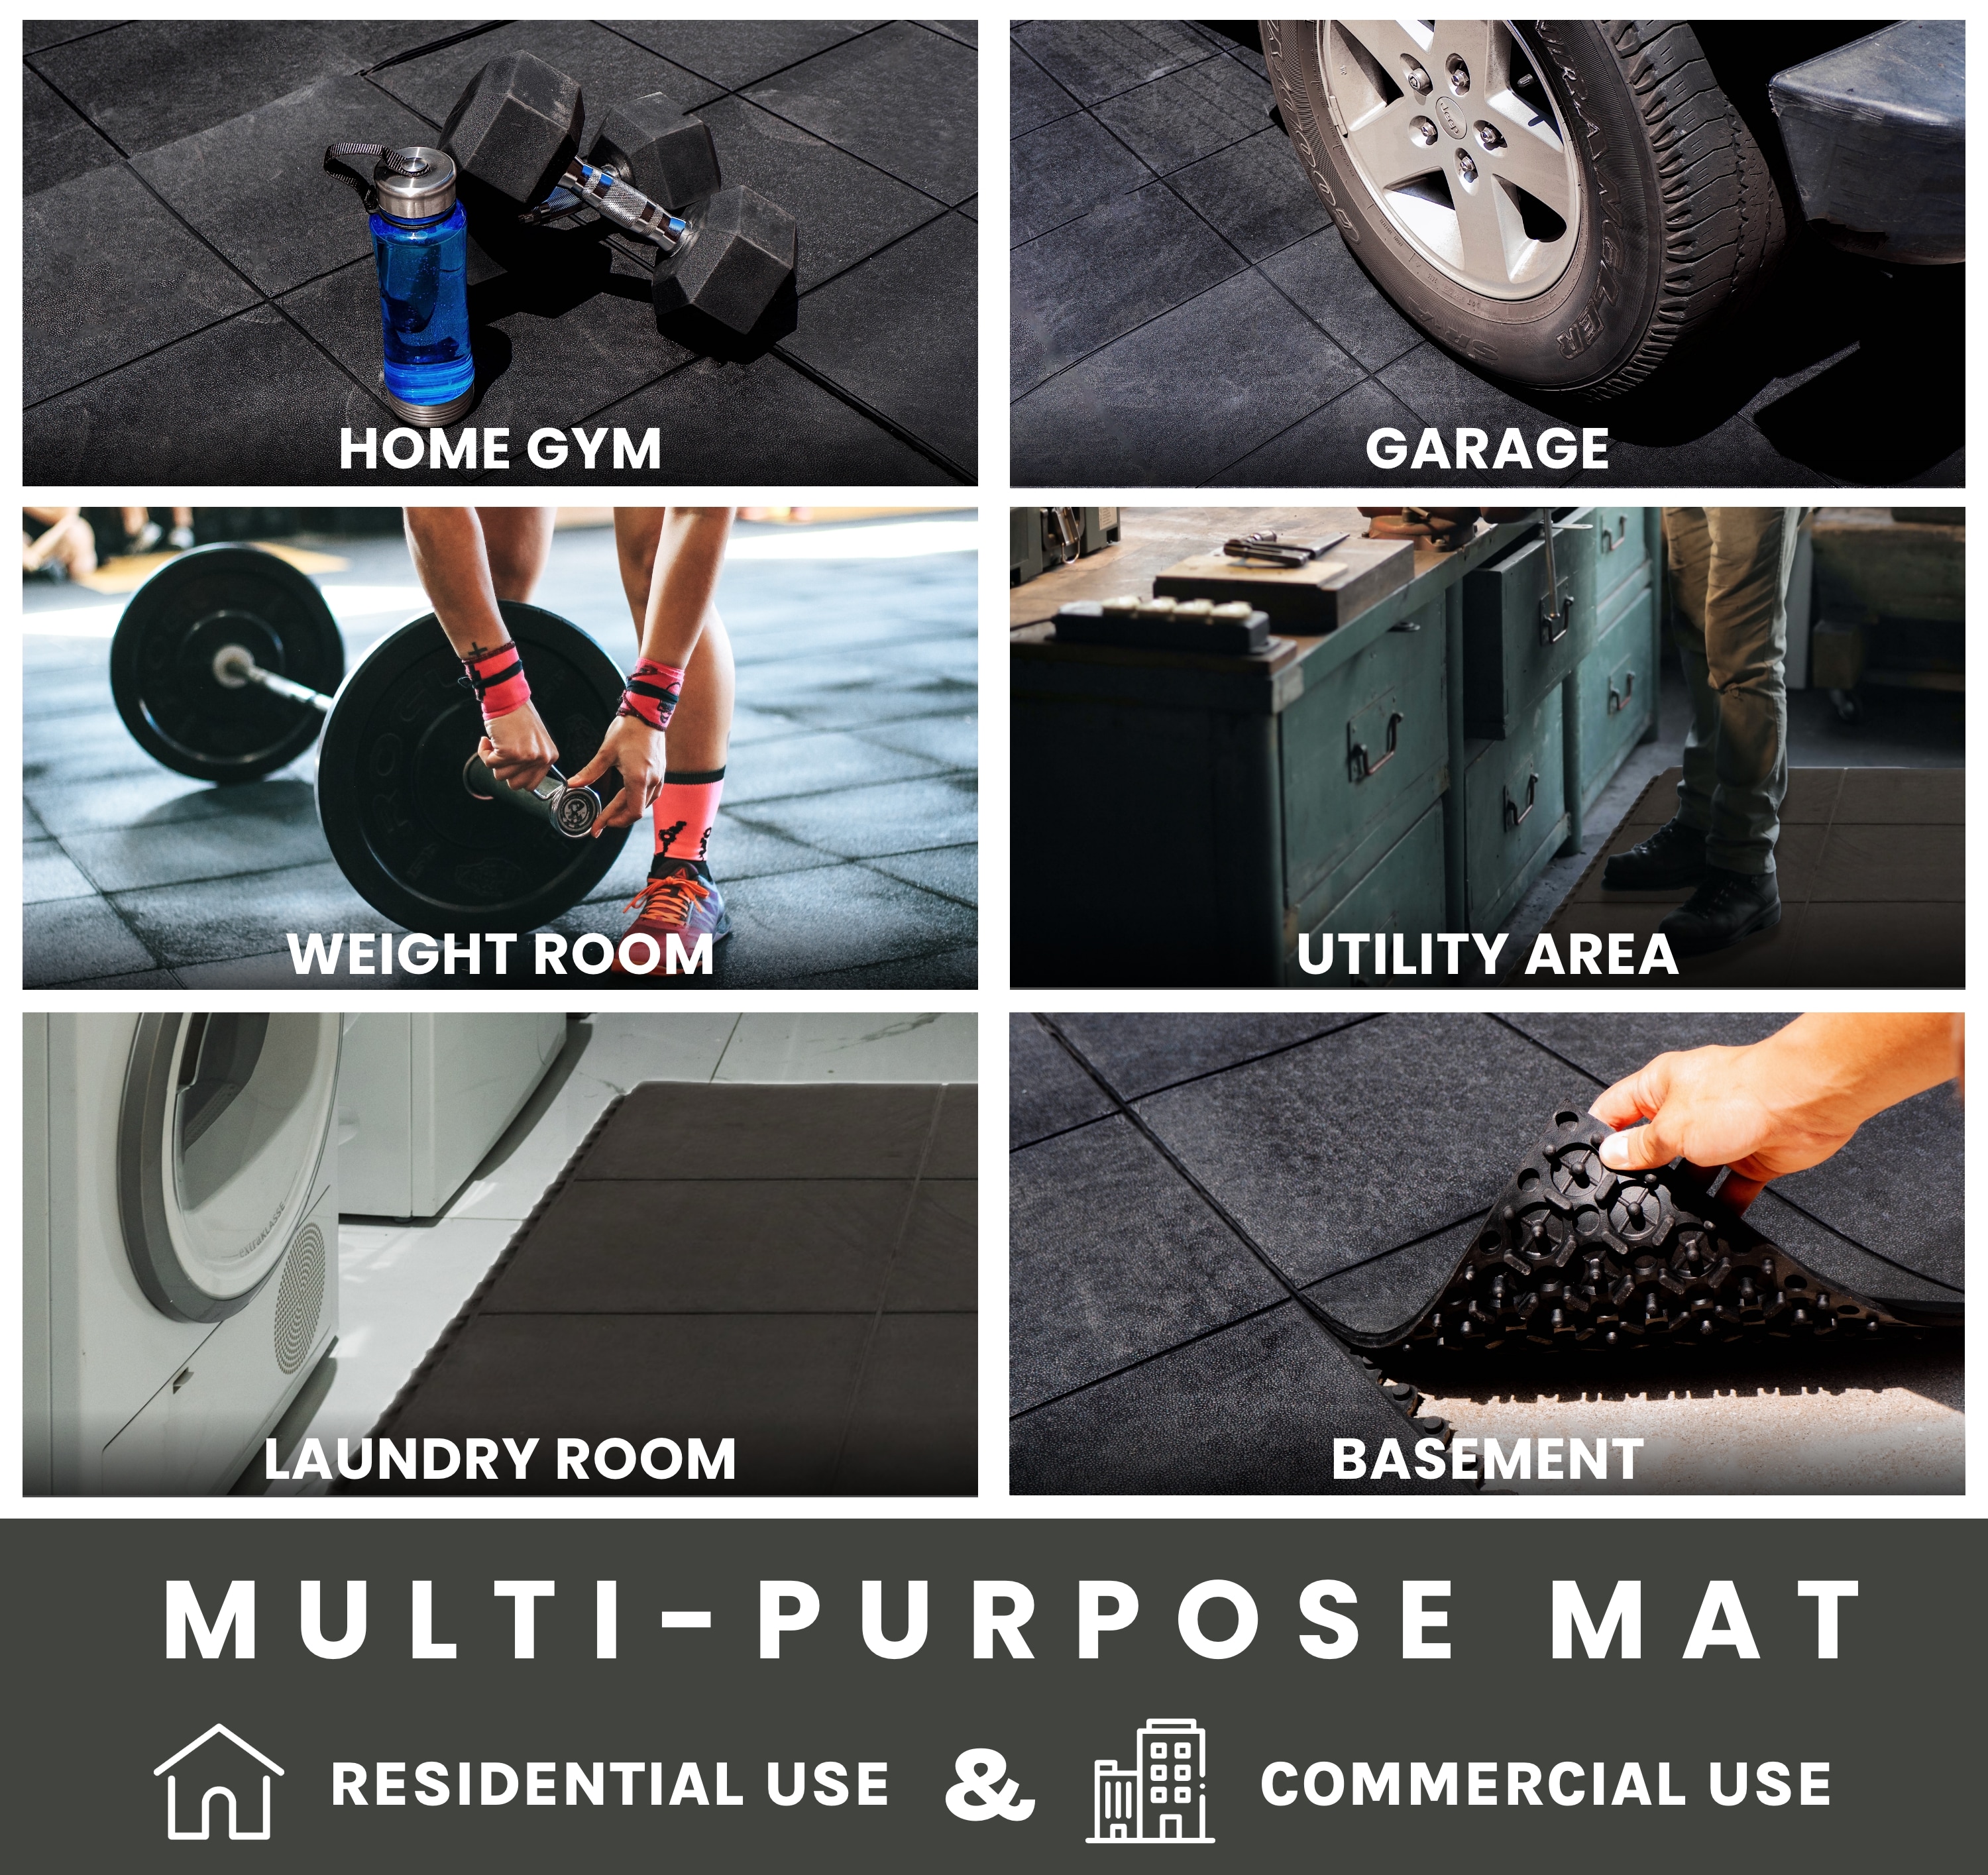 Envelor Durable Anti-Fatigue Rubber Floor Mat, Interlocking Commercial Floor Mat 3' x 3